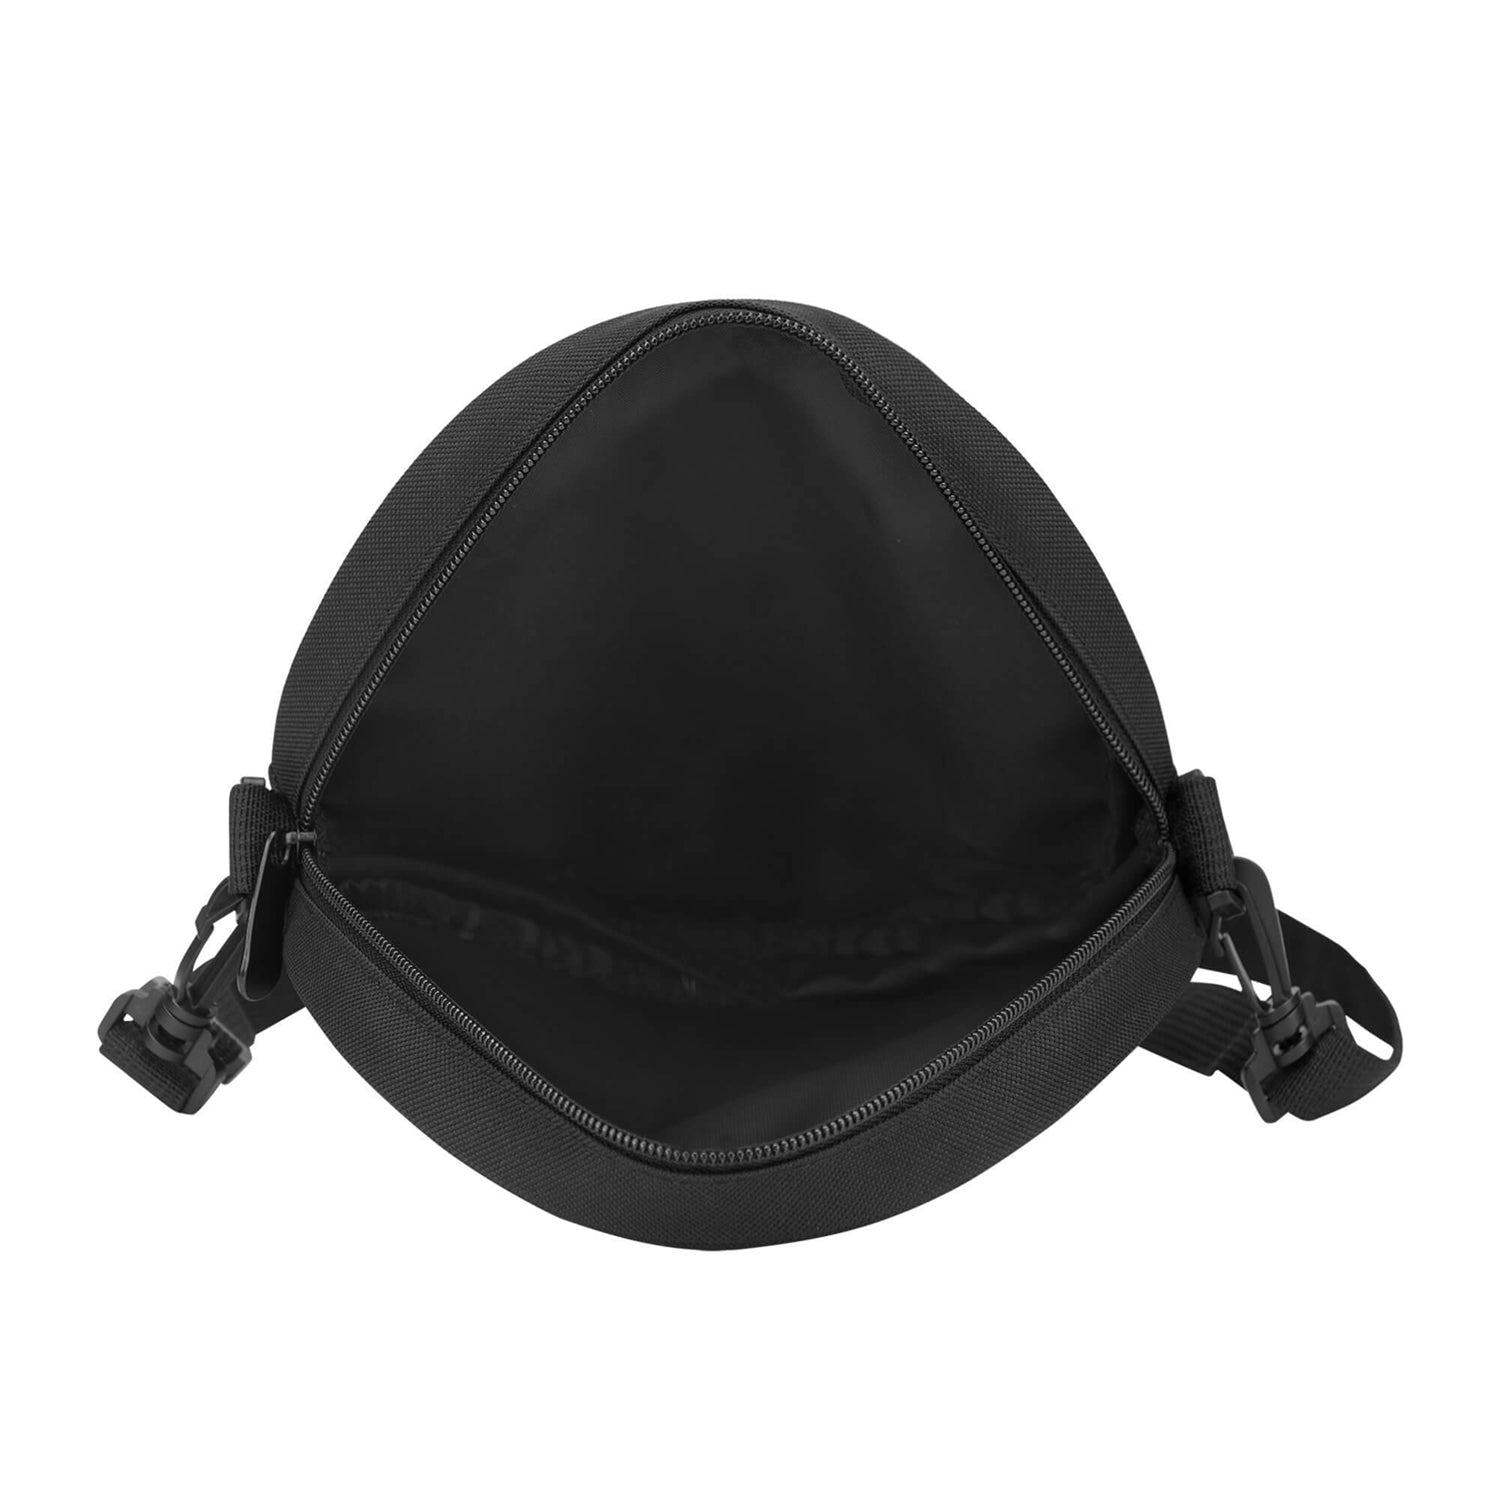 irvine-ancient-tartan-round-satchel-bags